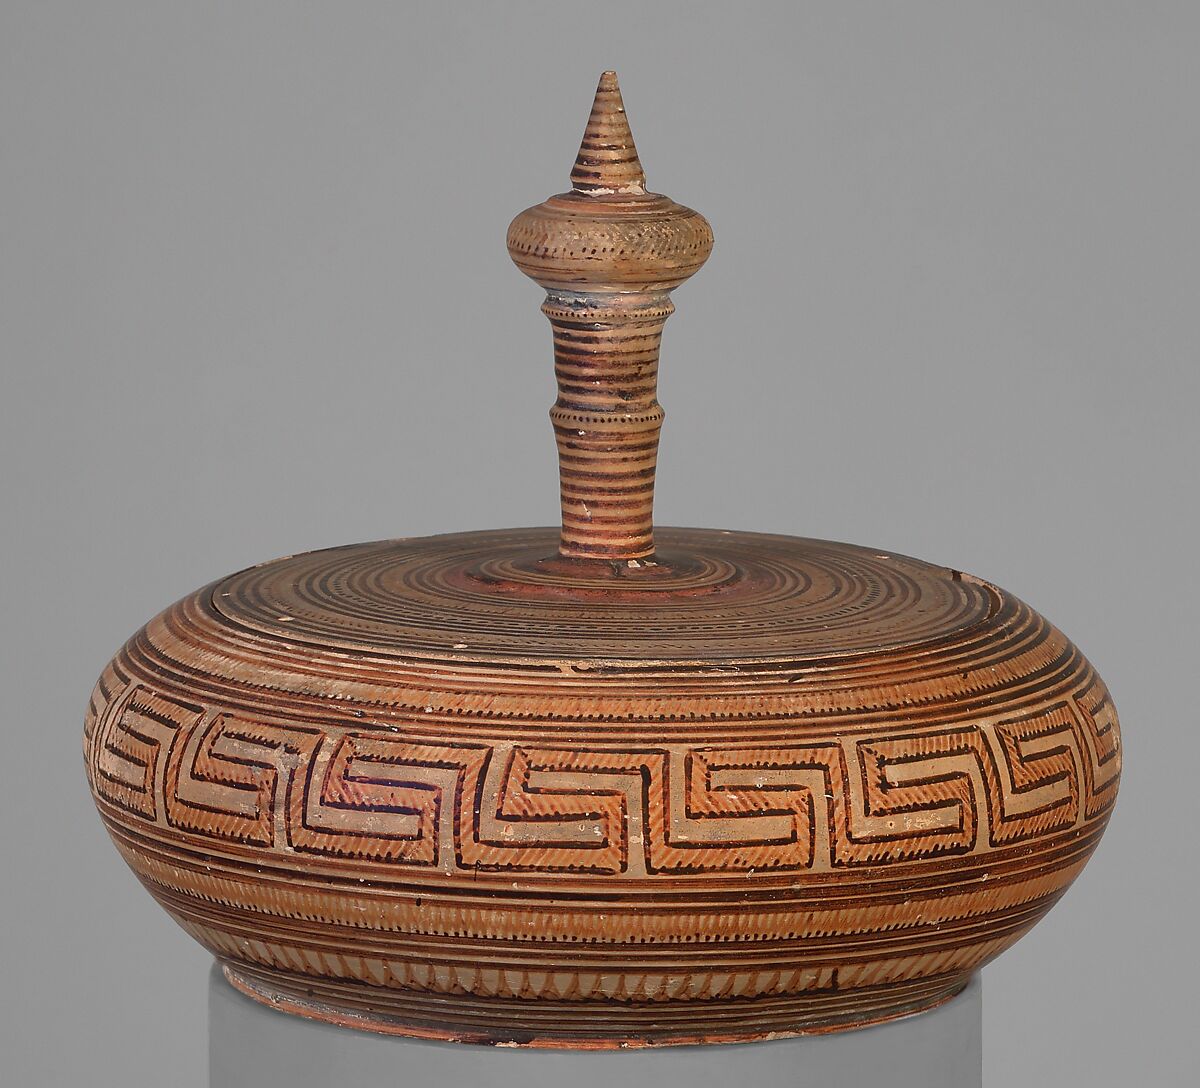 Terracotta pyxis (box with lid), Terracotta, Greek, Attic 